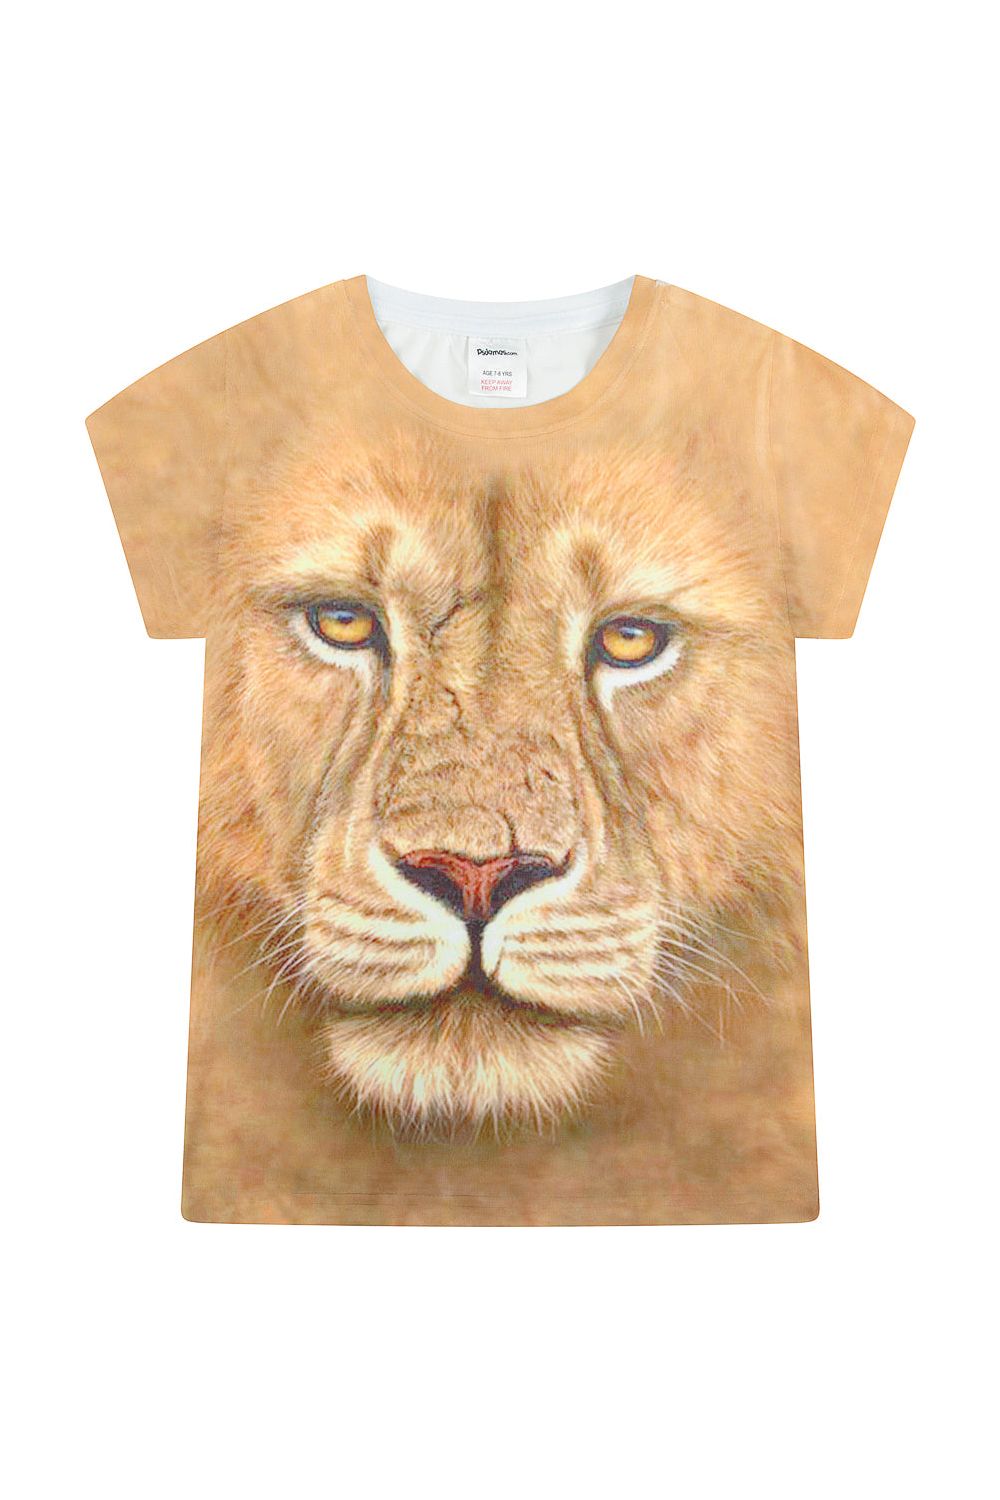 Lion Paw Print  3D Long Pyjamas - Pyjamas.com